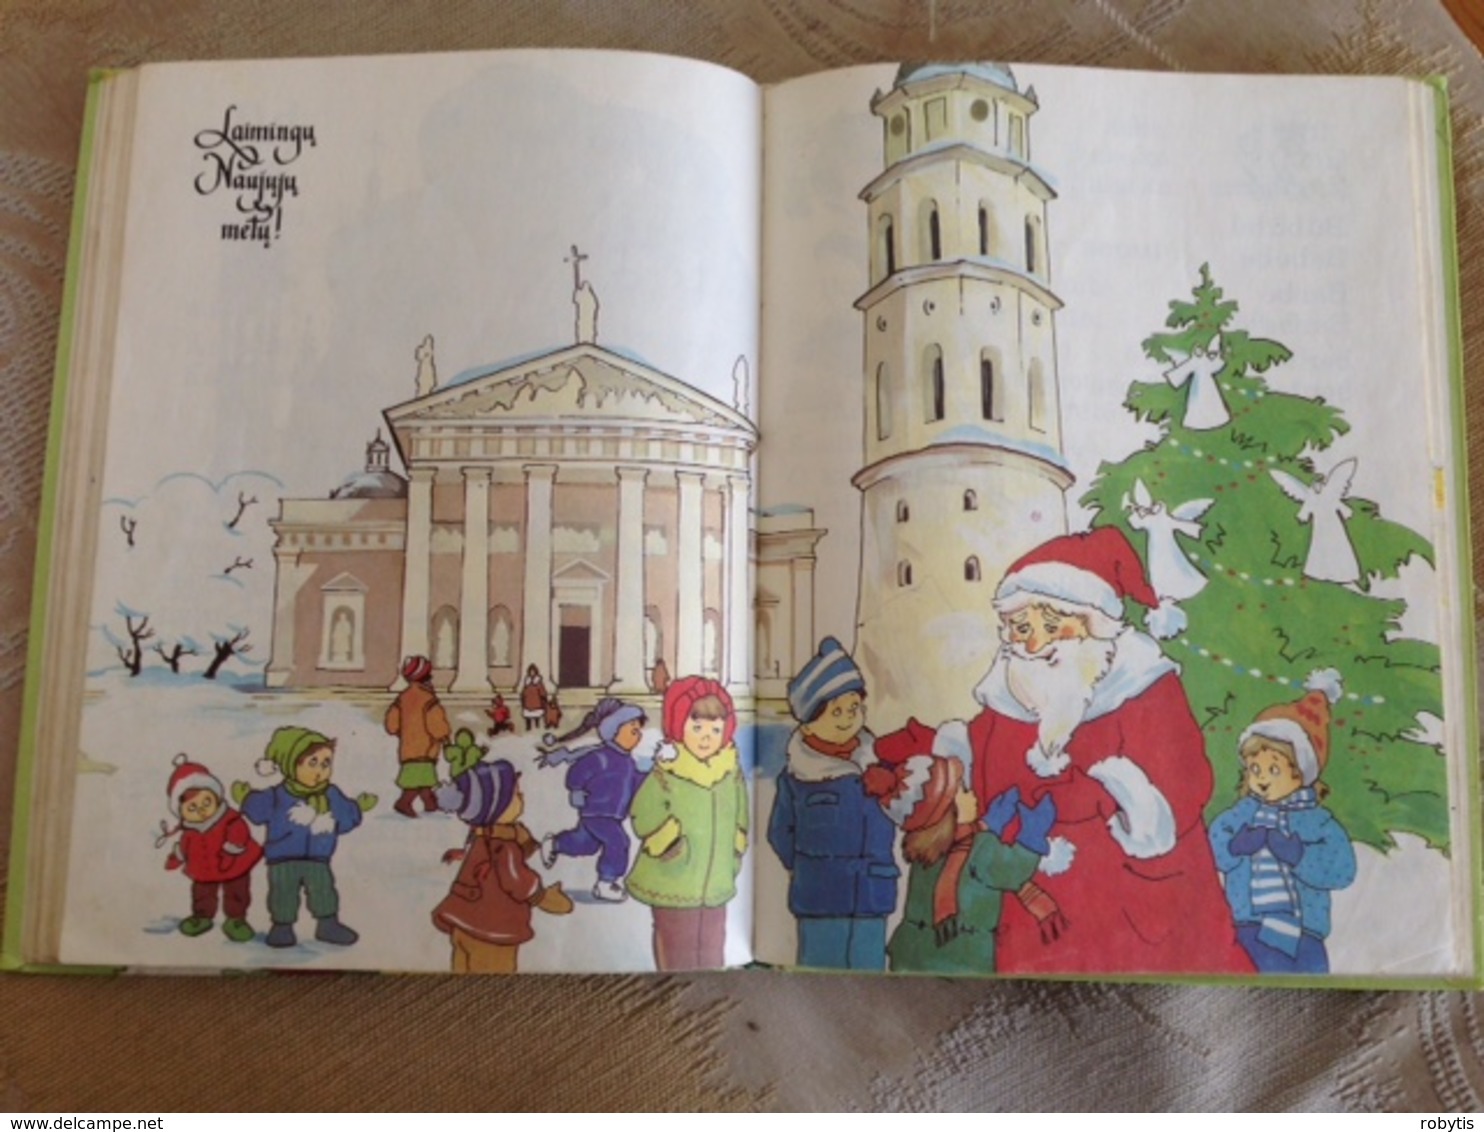 Lithuania school book 1992